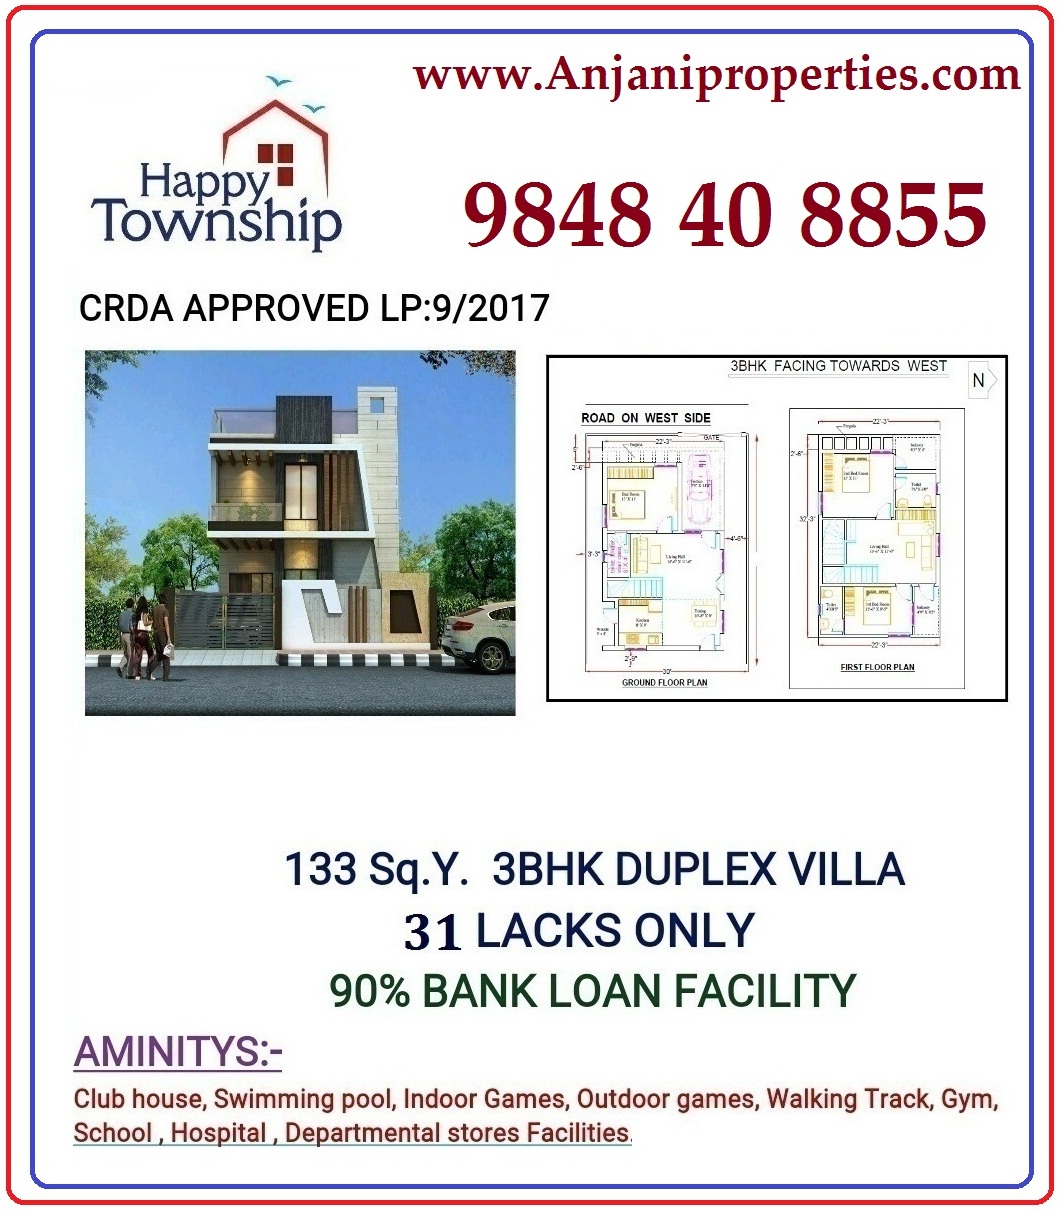 3BHK Duplex Villa for 31 Lacks only. A Well Gated Community suituated near Kanchikacherala, Vijayawada.